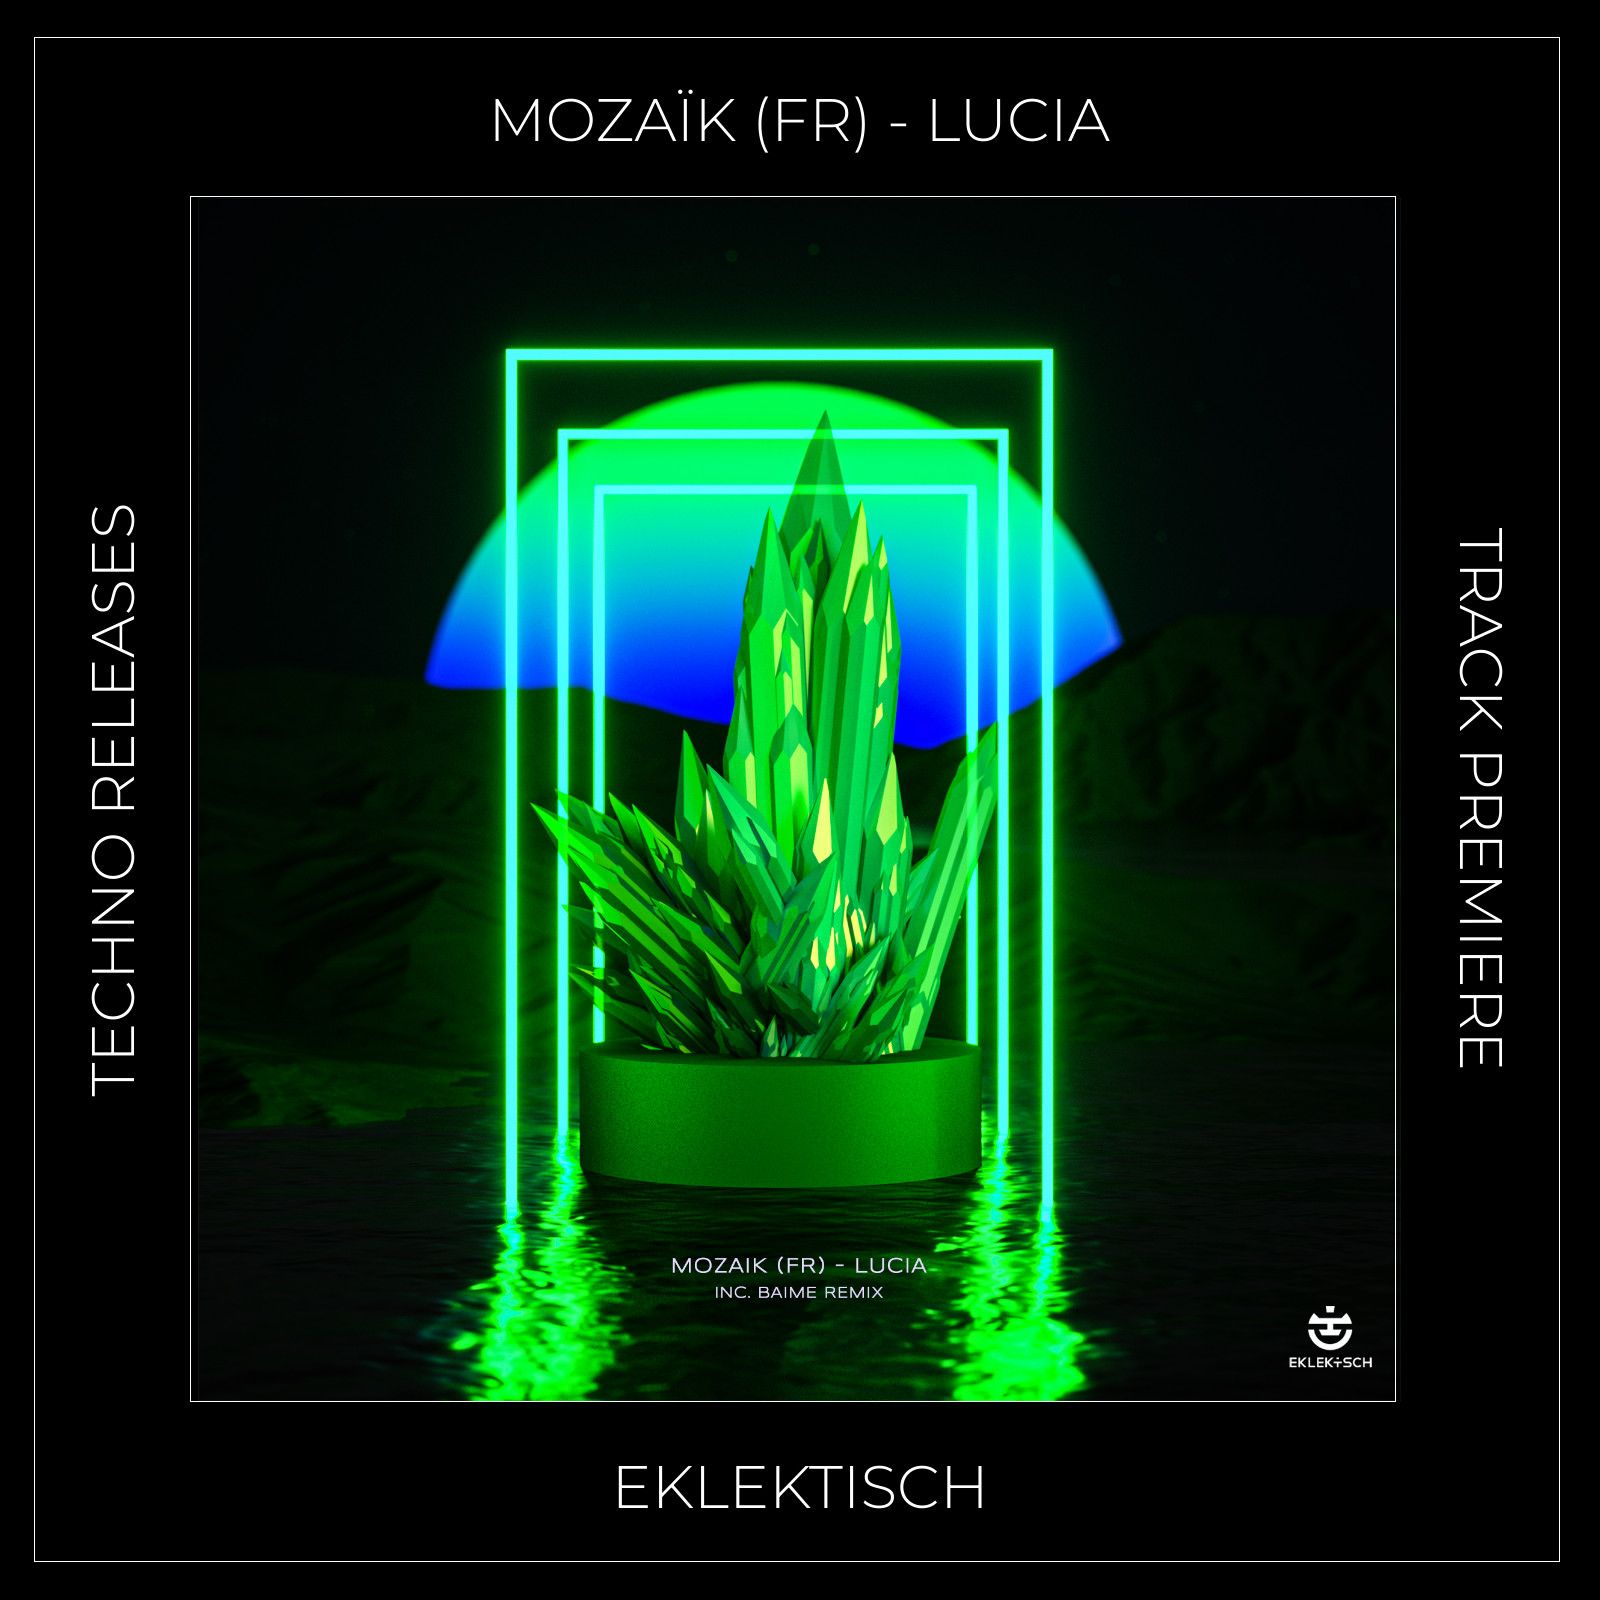 Télécharger Track Premiere: Mozaïk (FR) - Lucia (Original Mix) [EKLEKTISCH]